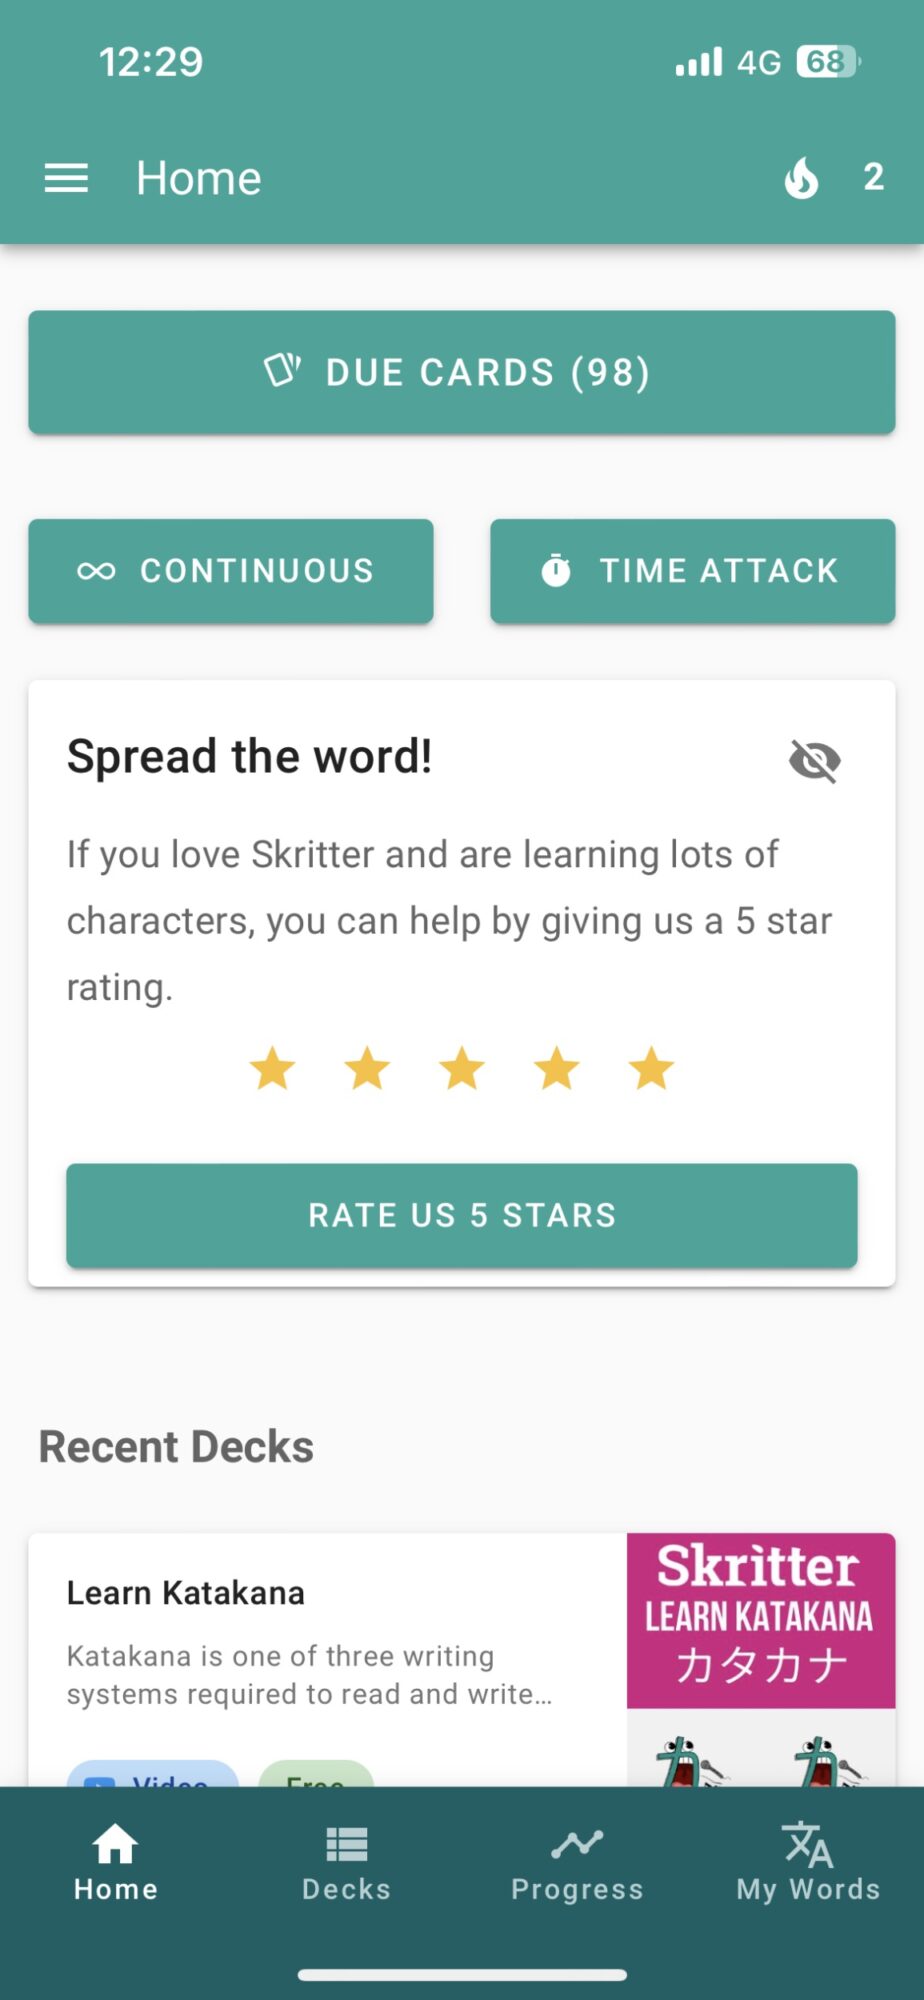 A screenshot of the home screen on the Skritter app.